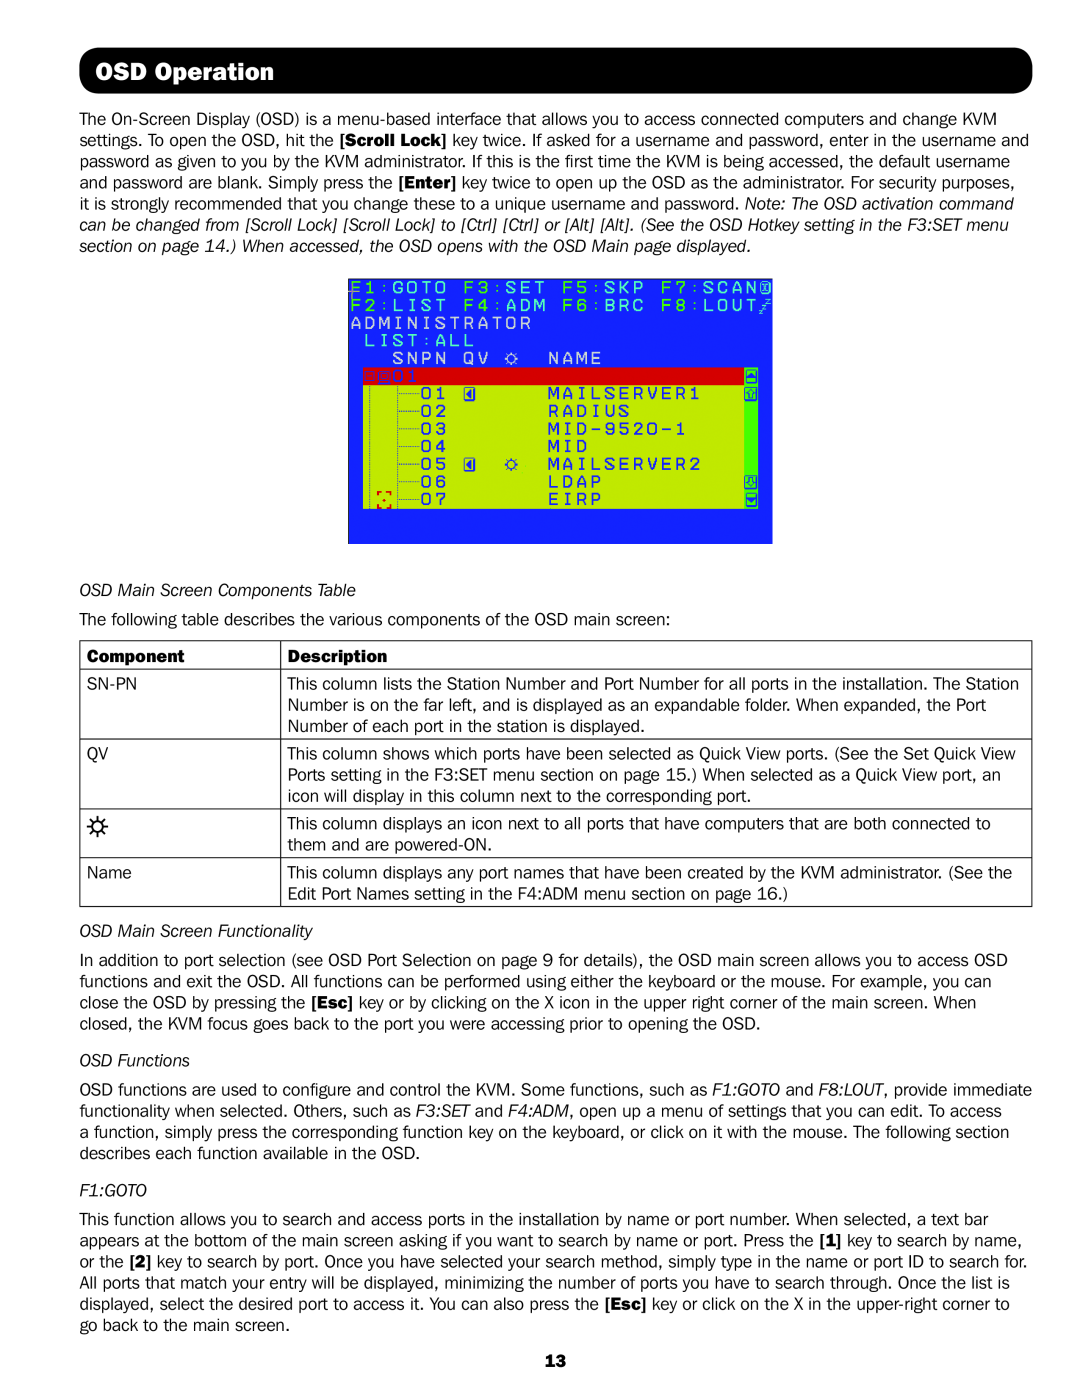 Tripp Lite B064-016 OSD Operation, OSD Main Screen Components Table, Description, OSD Main Screen Functionality, F1GOTO 